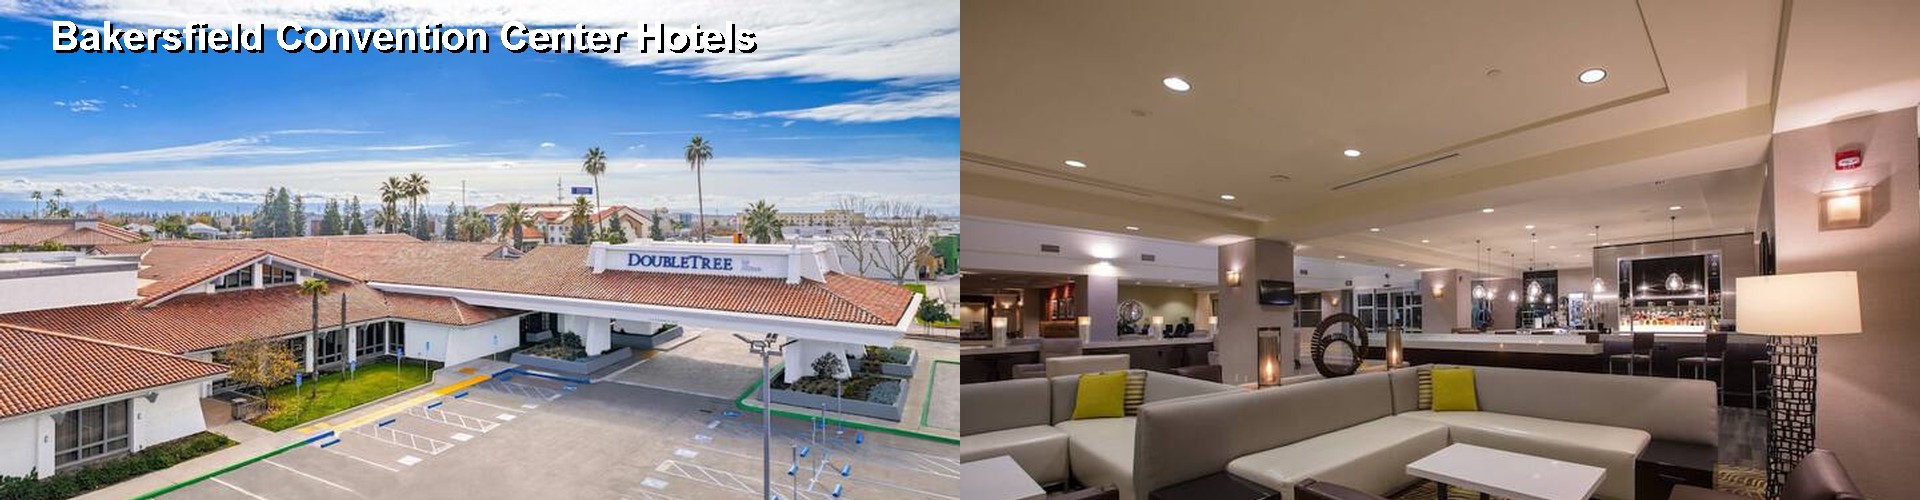 5 Best Hotels near Bakersfield Convention Center